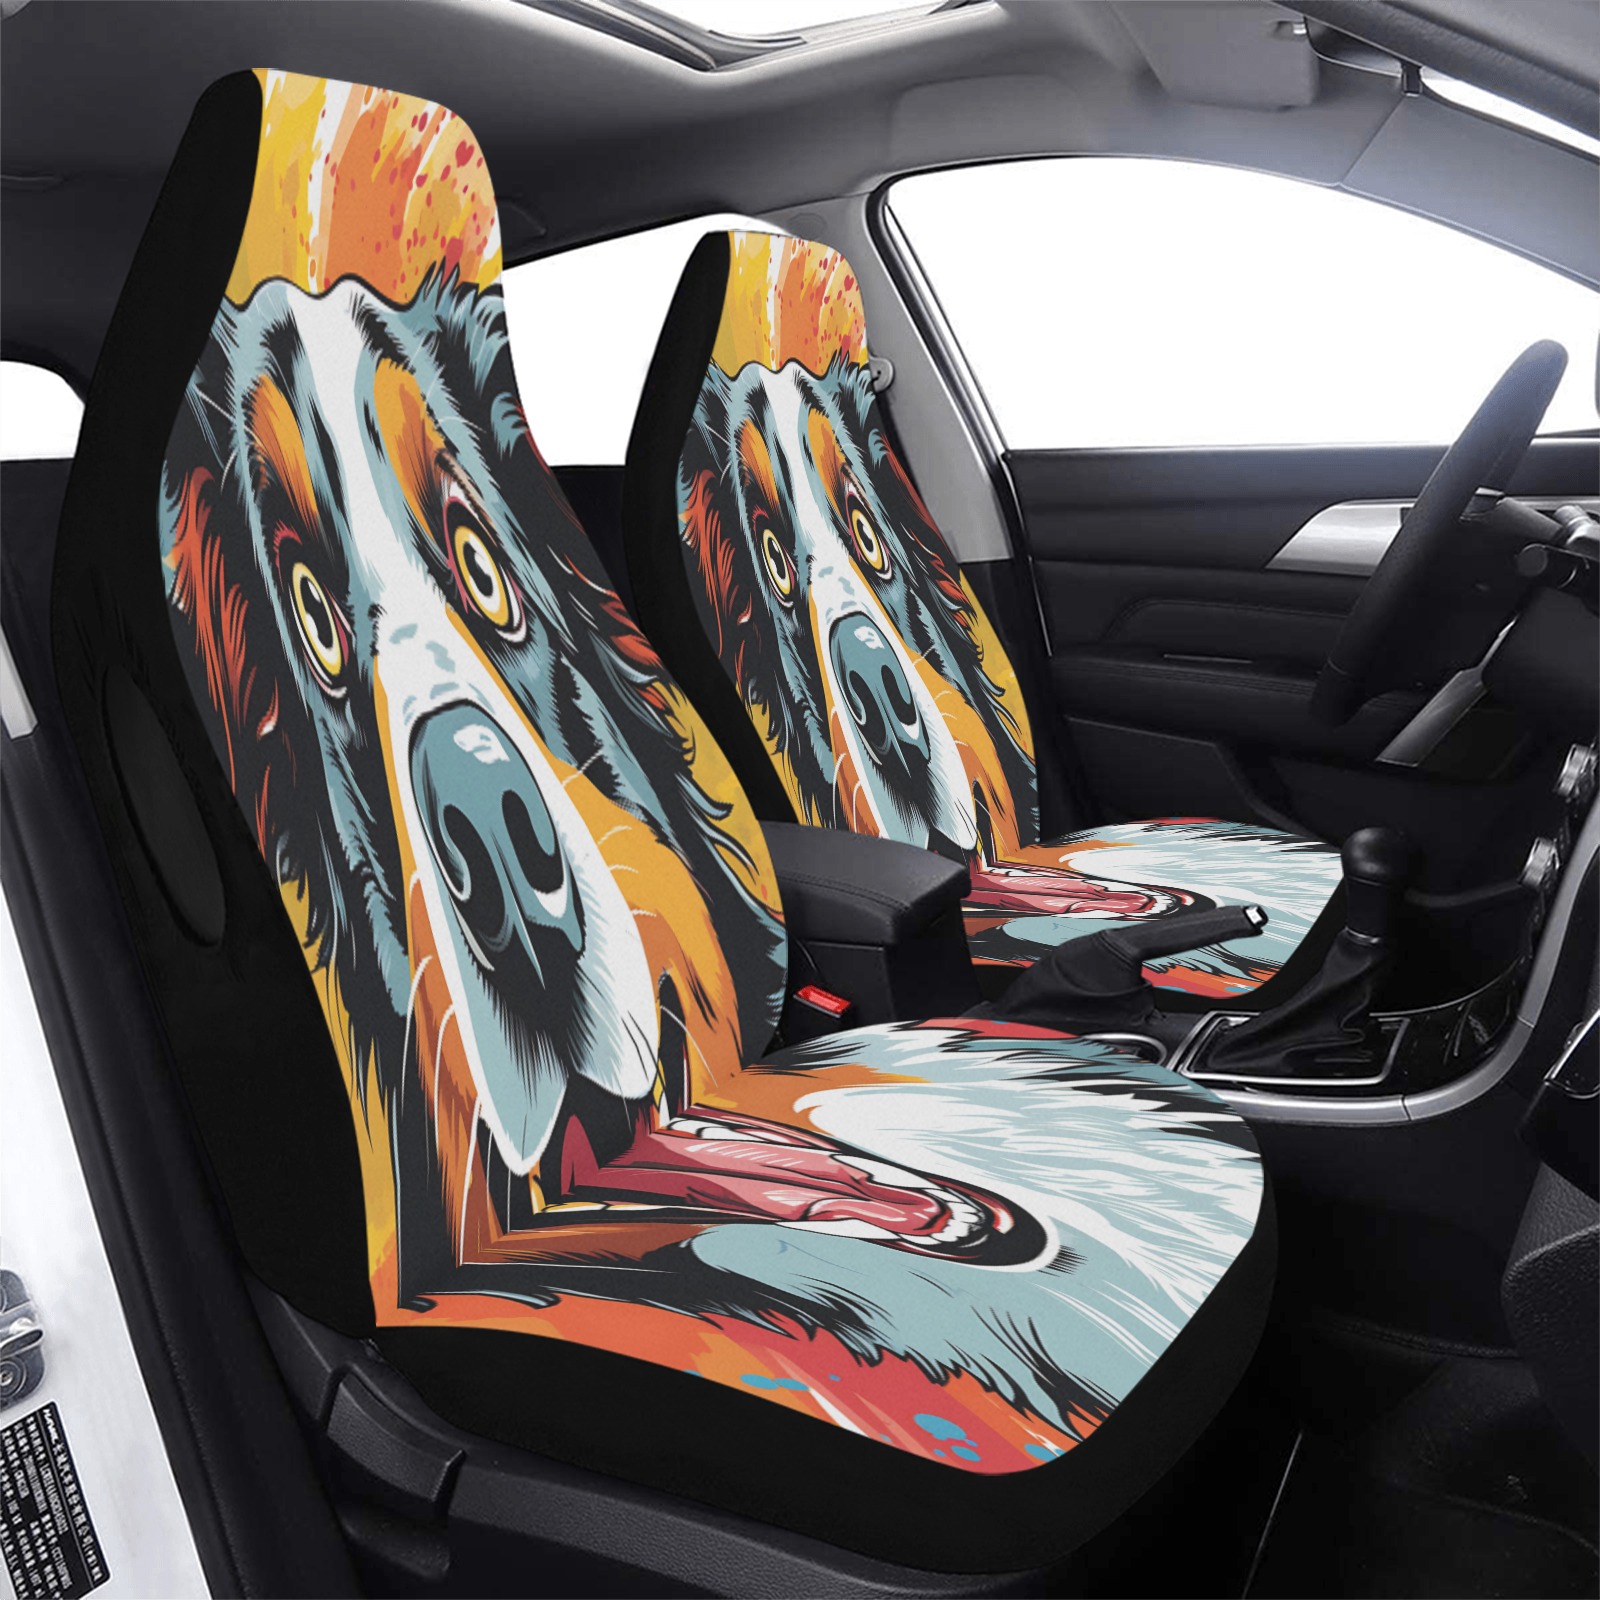 Australian Shepherd Pop Art Car Seat Cover Airbag Compatible (Set of 2)